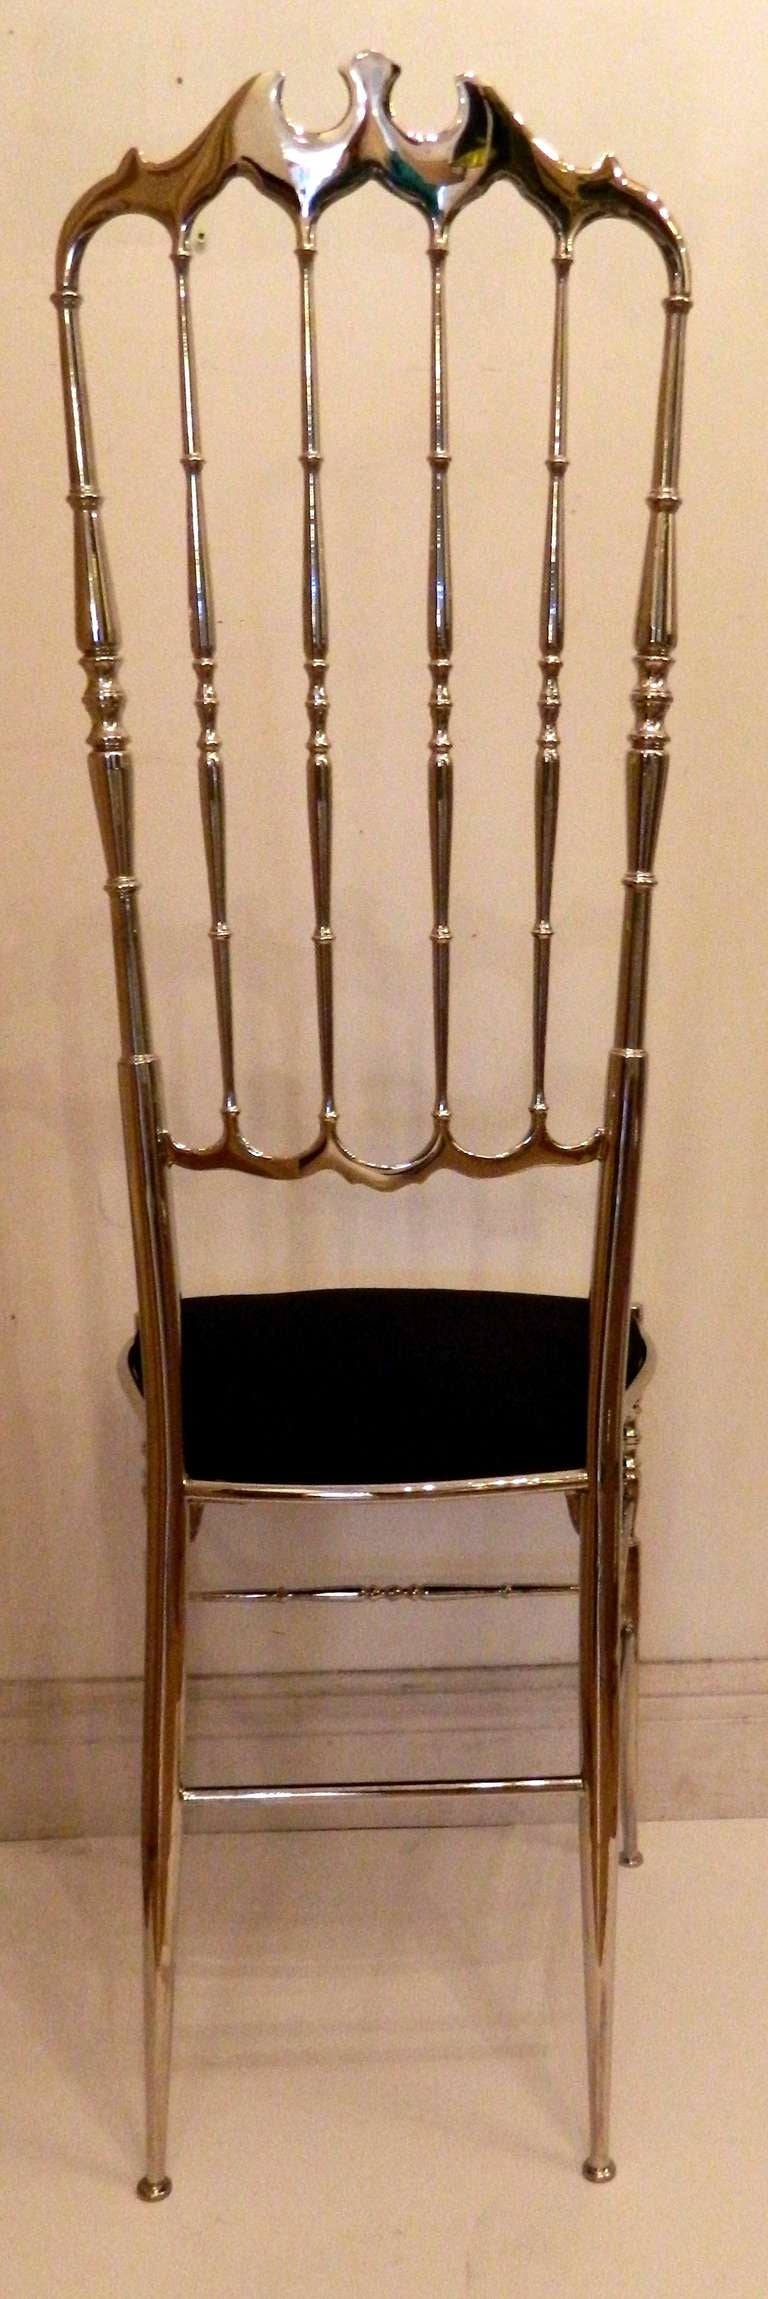 20th Century 8 High Back Nickel-Plated Chiavari Chairs